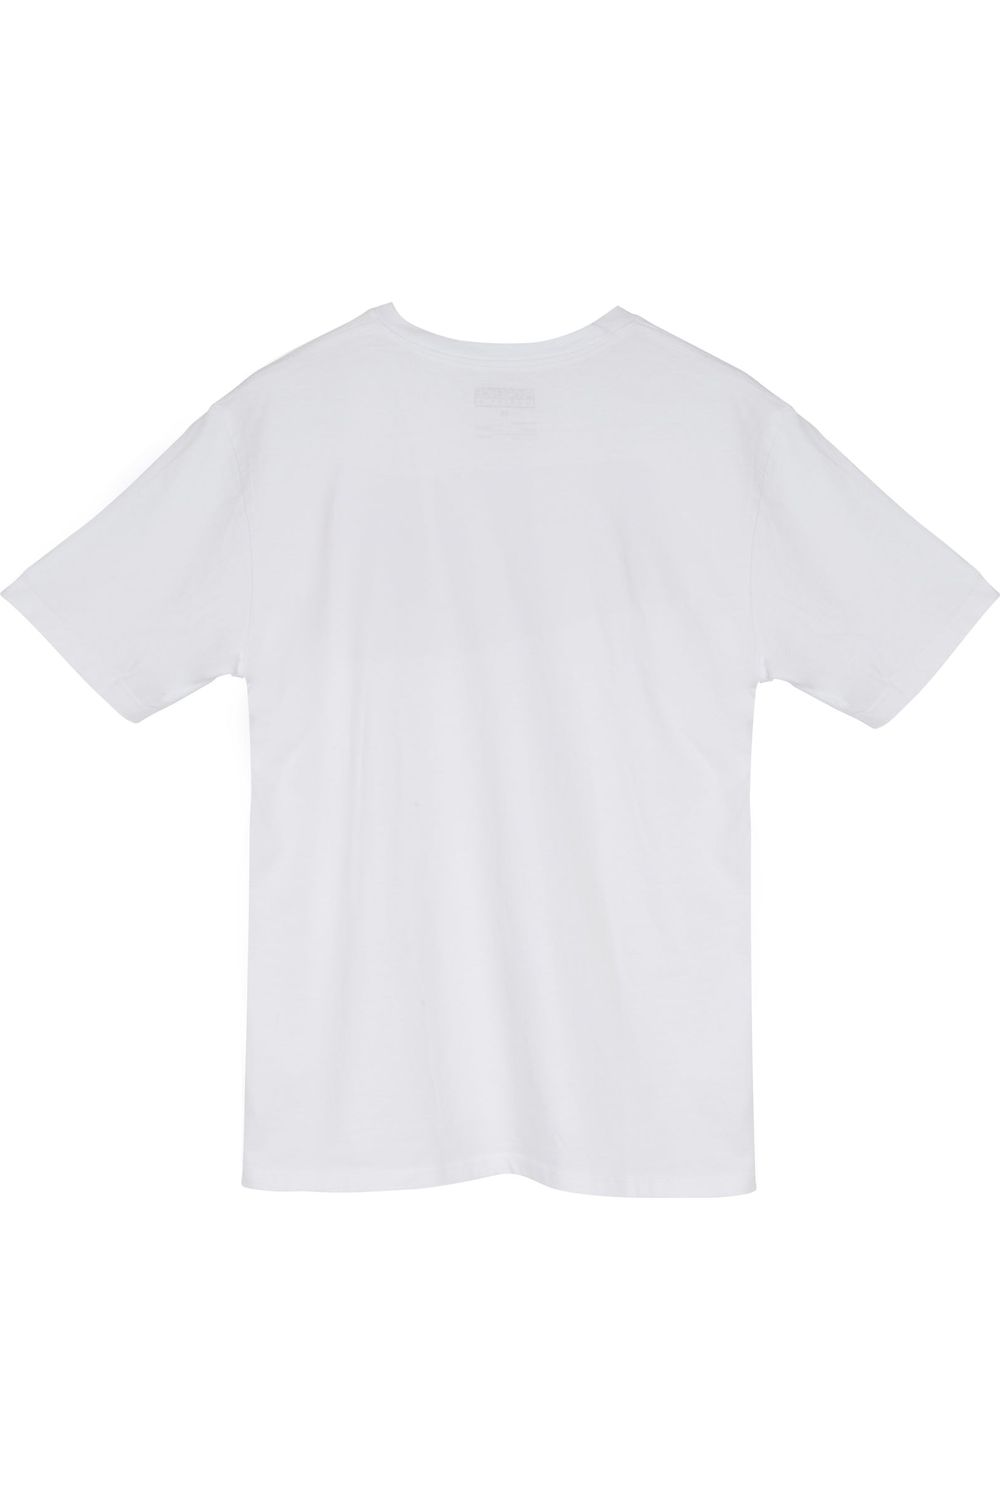 Florence Marine X Logo Island Chain T-Shirt White